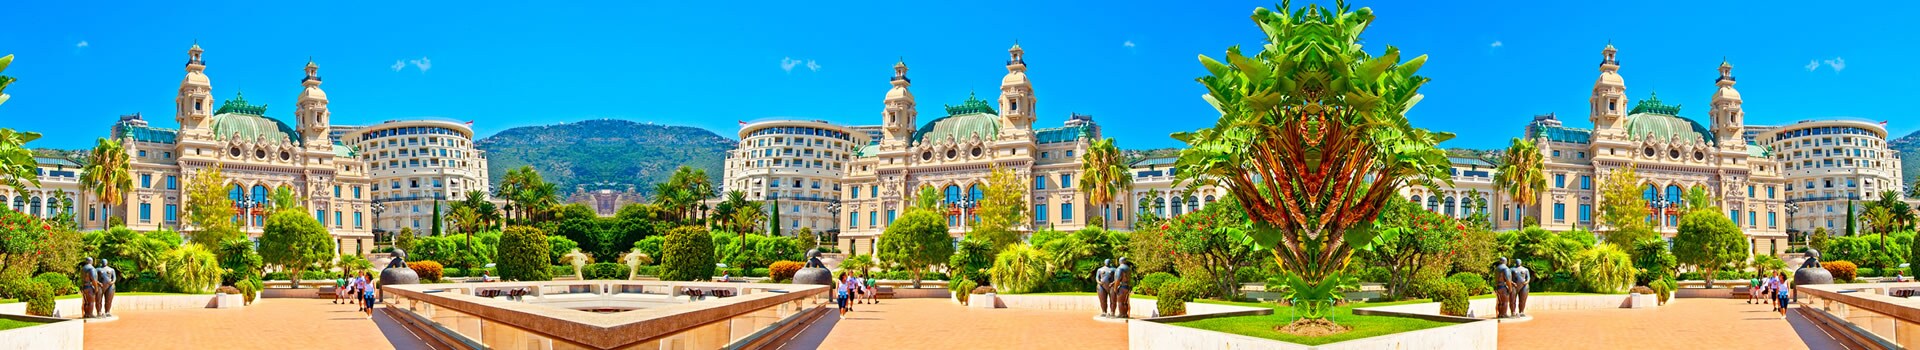 Biarritz - Monaco